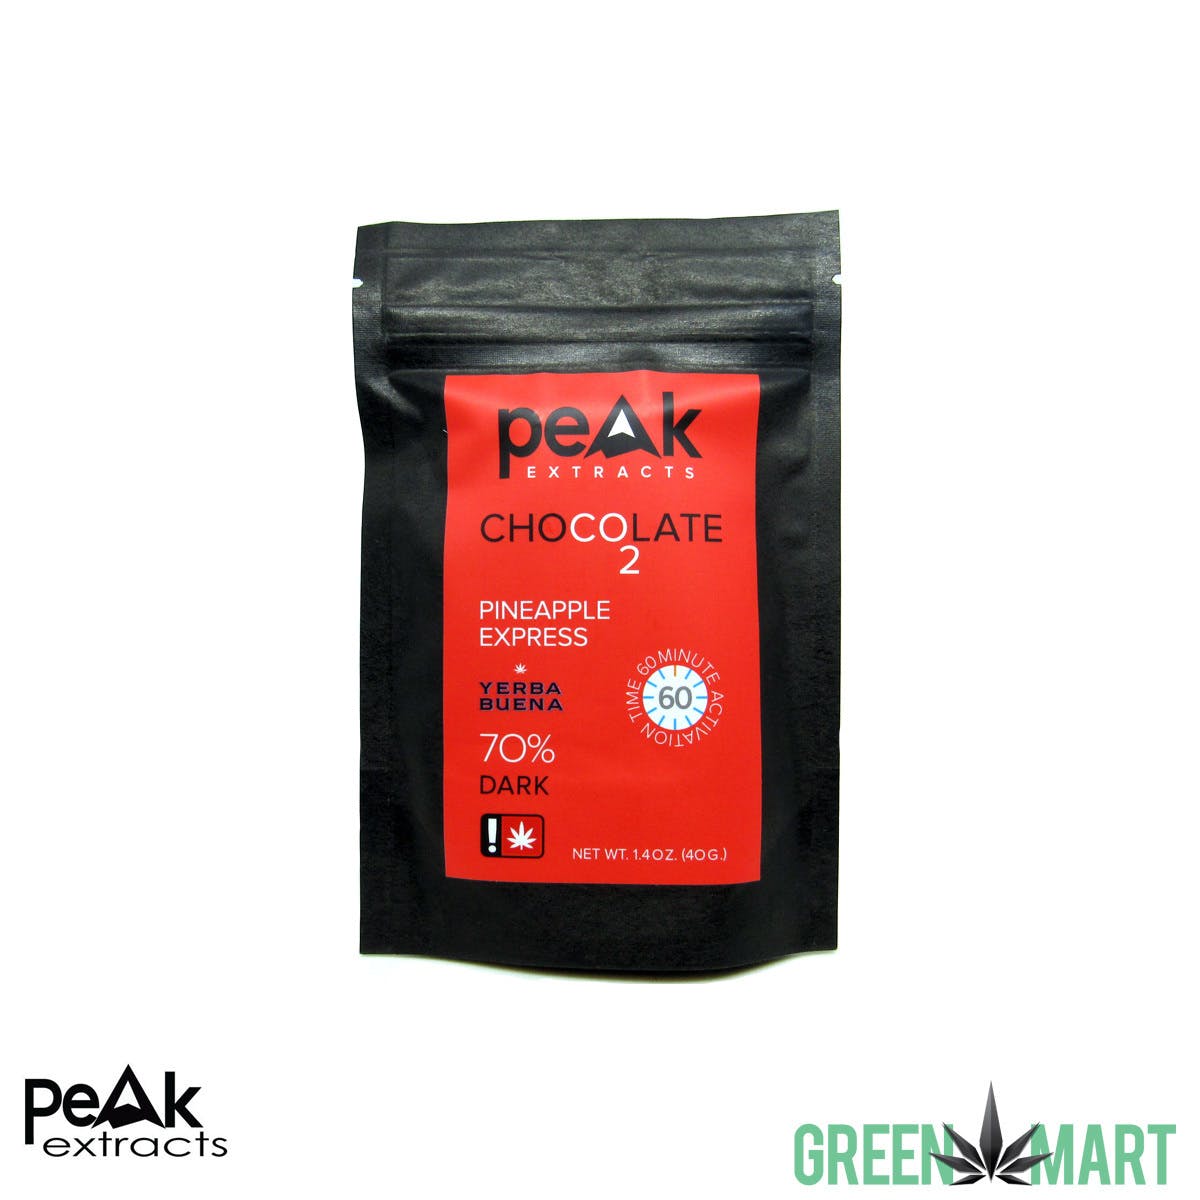 Peak Extracts Dark Chocolate - Pineapple Express